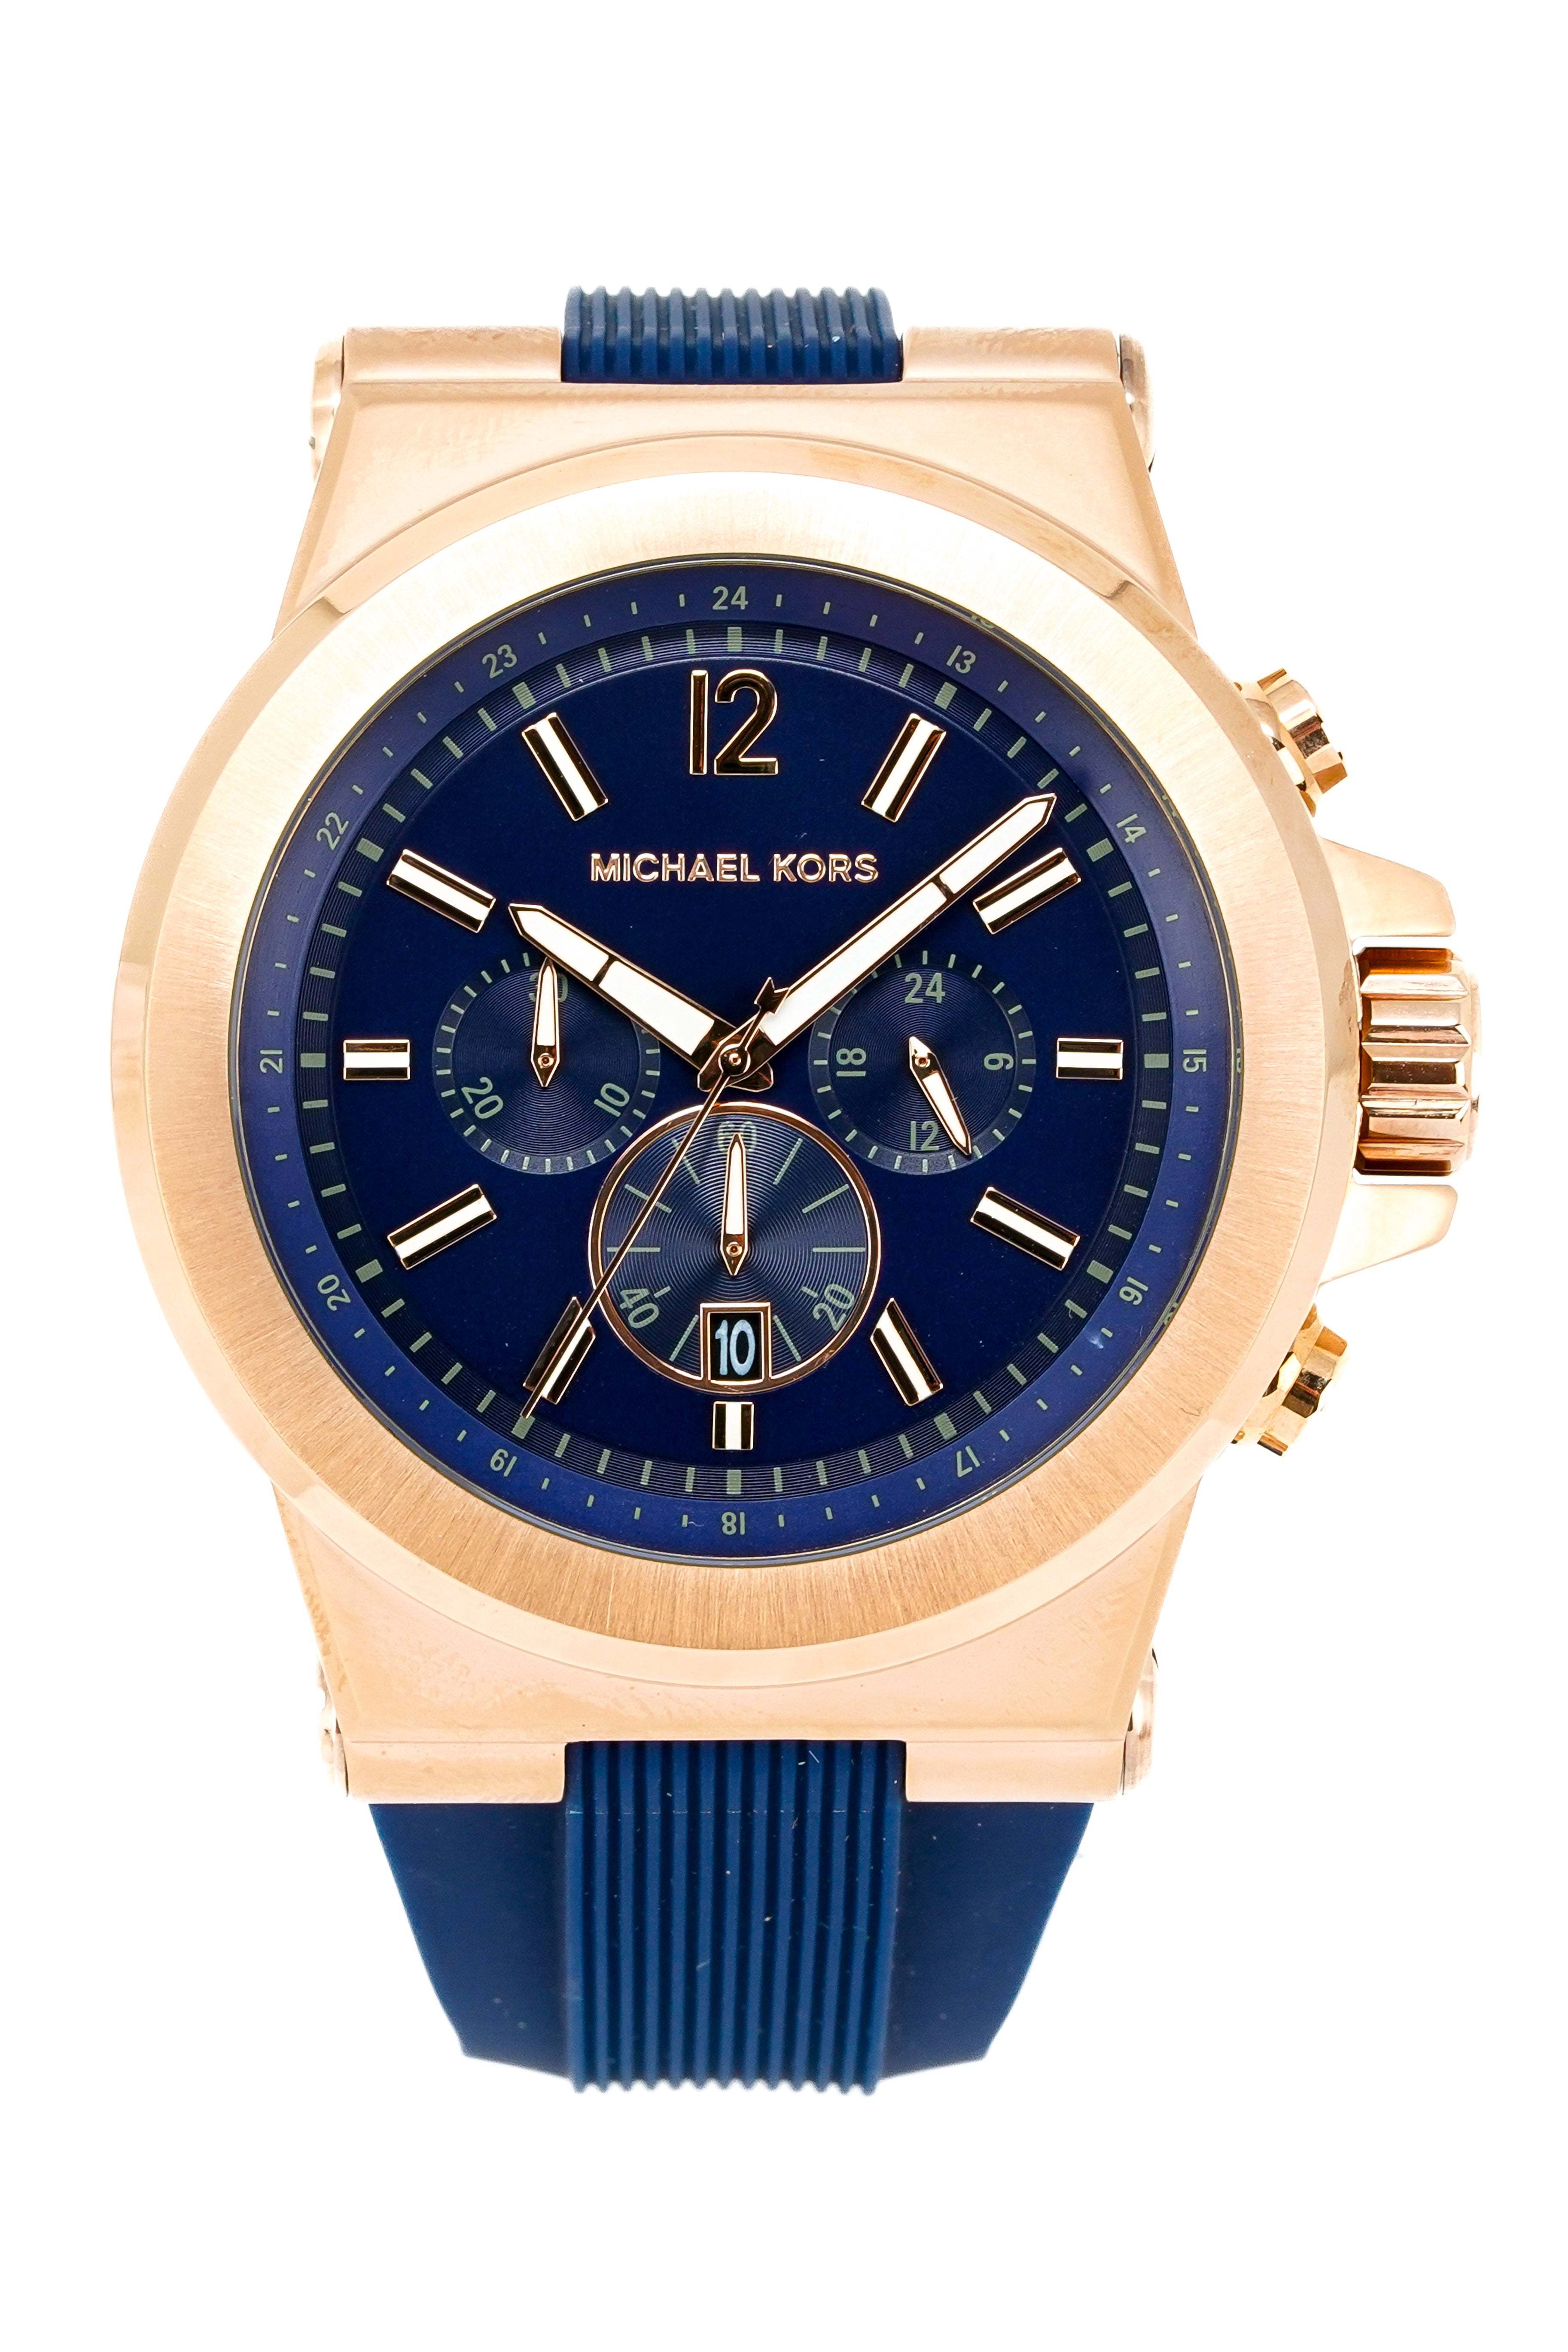 Michael Kors Men's Watch Chronograph Dylan Blue MK8295